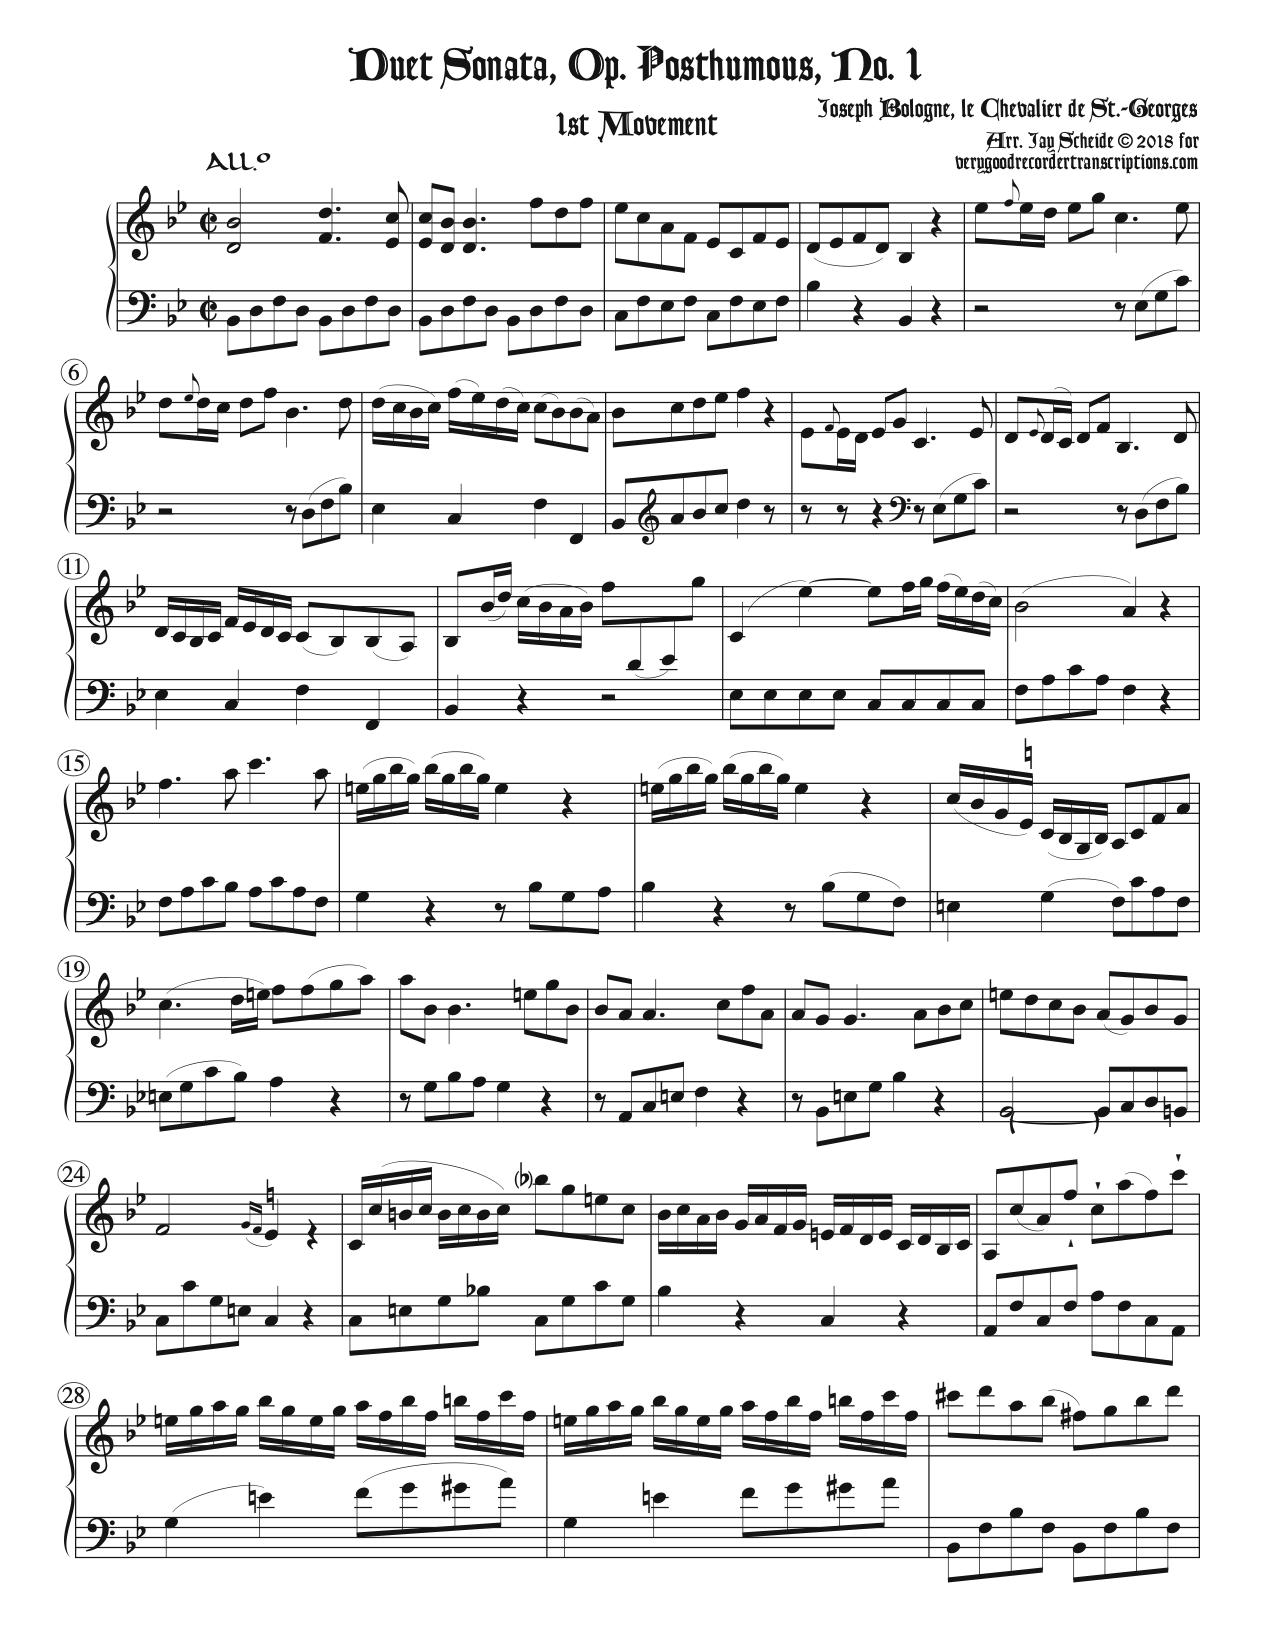 All Six Op. Posthumous Duet Sonatas